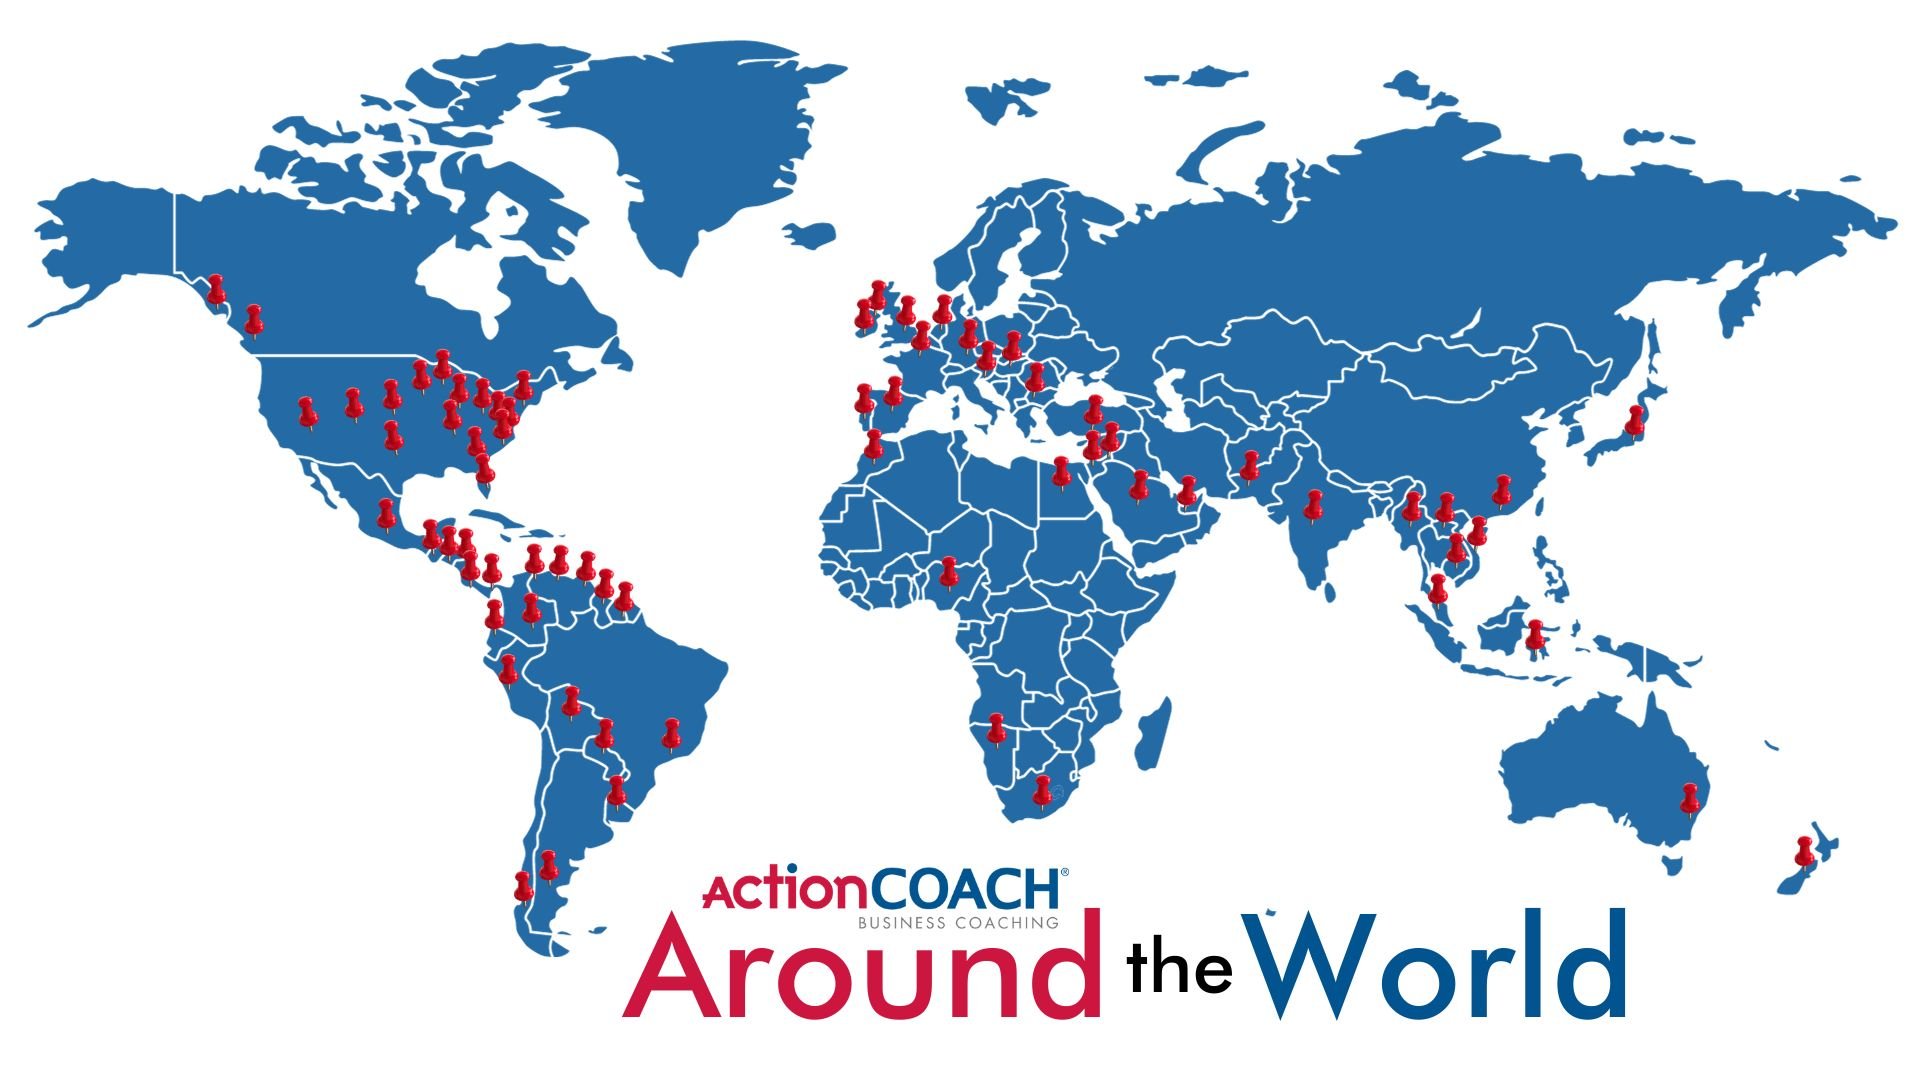 ActionCOACH Around the World